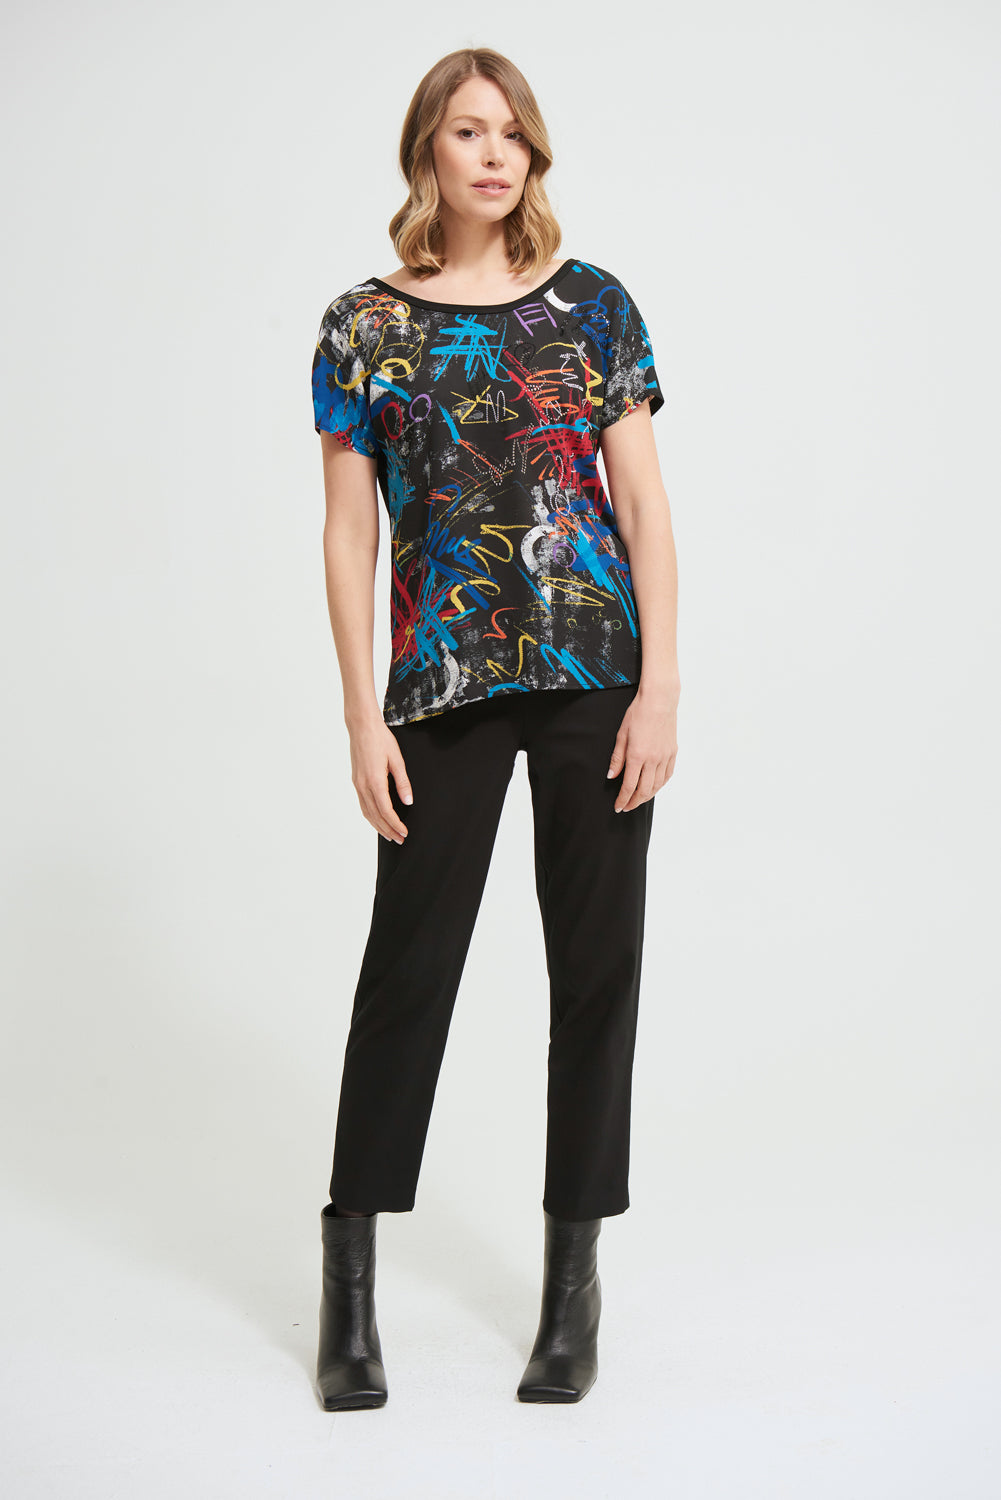 Joseph Ribkoff Black-Multi T-Shirt Style 213461